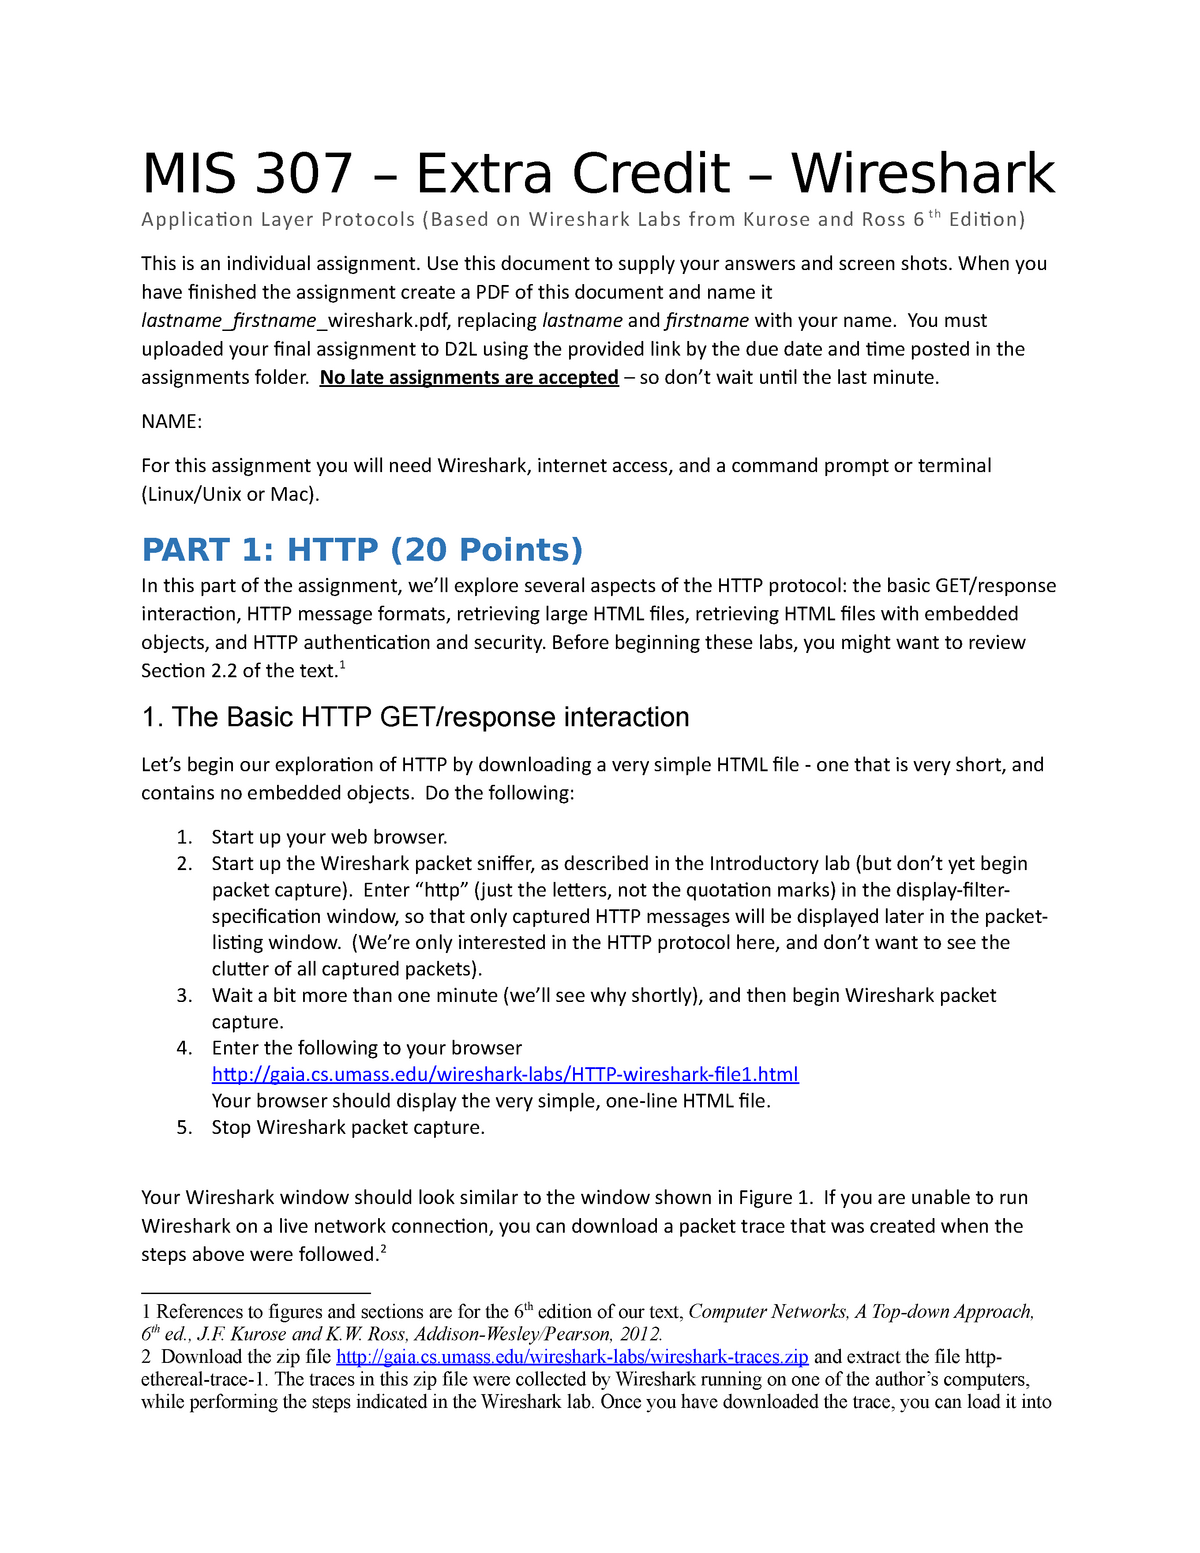 print wireshark packet on mac to pdf